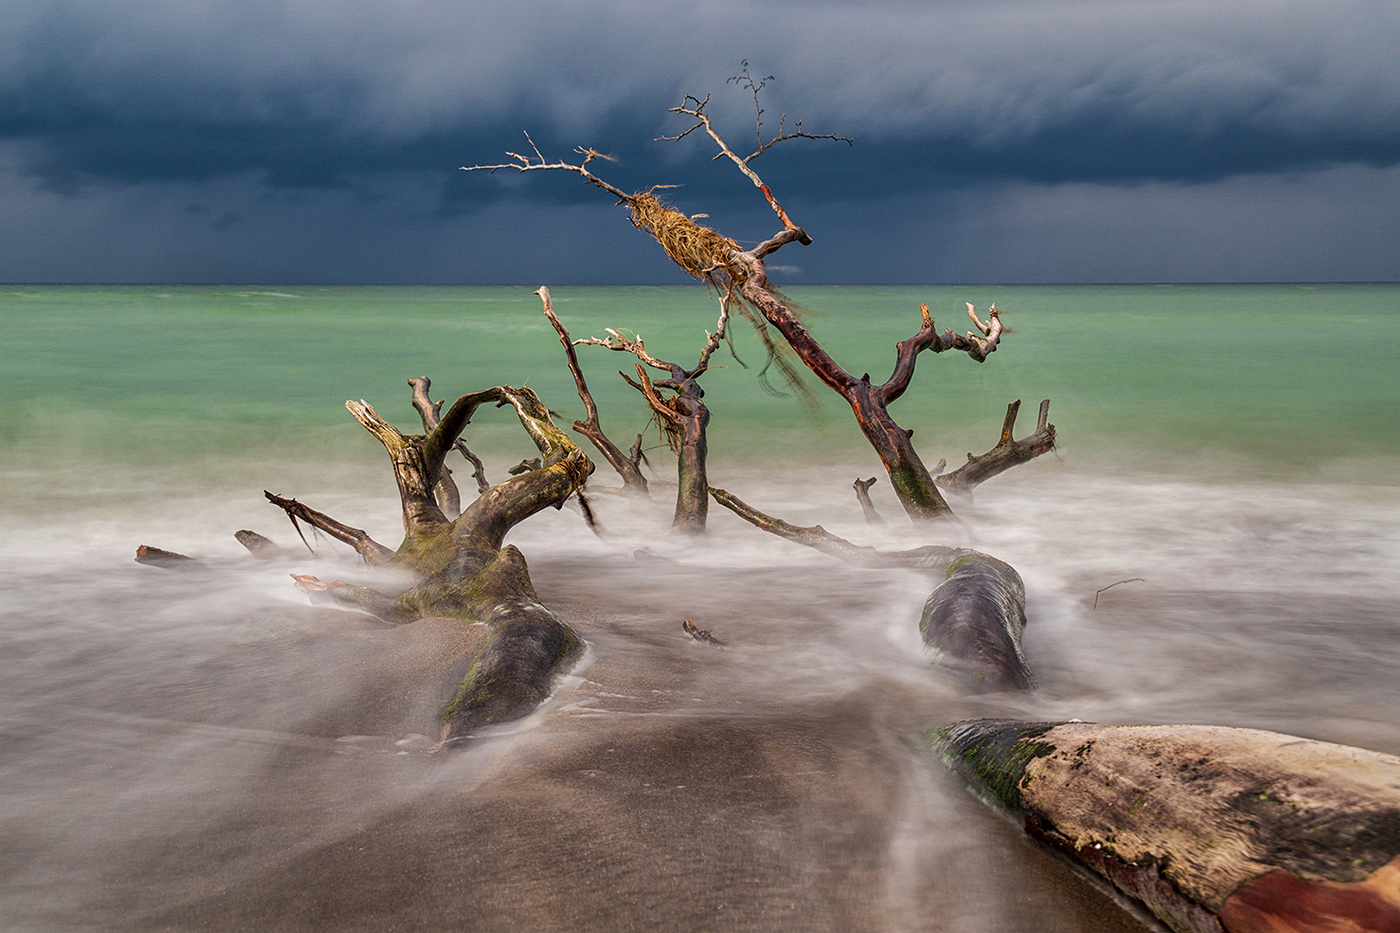 Approach Windstorm | © Sonja Molter